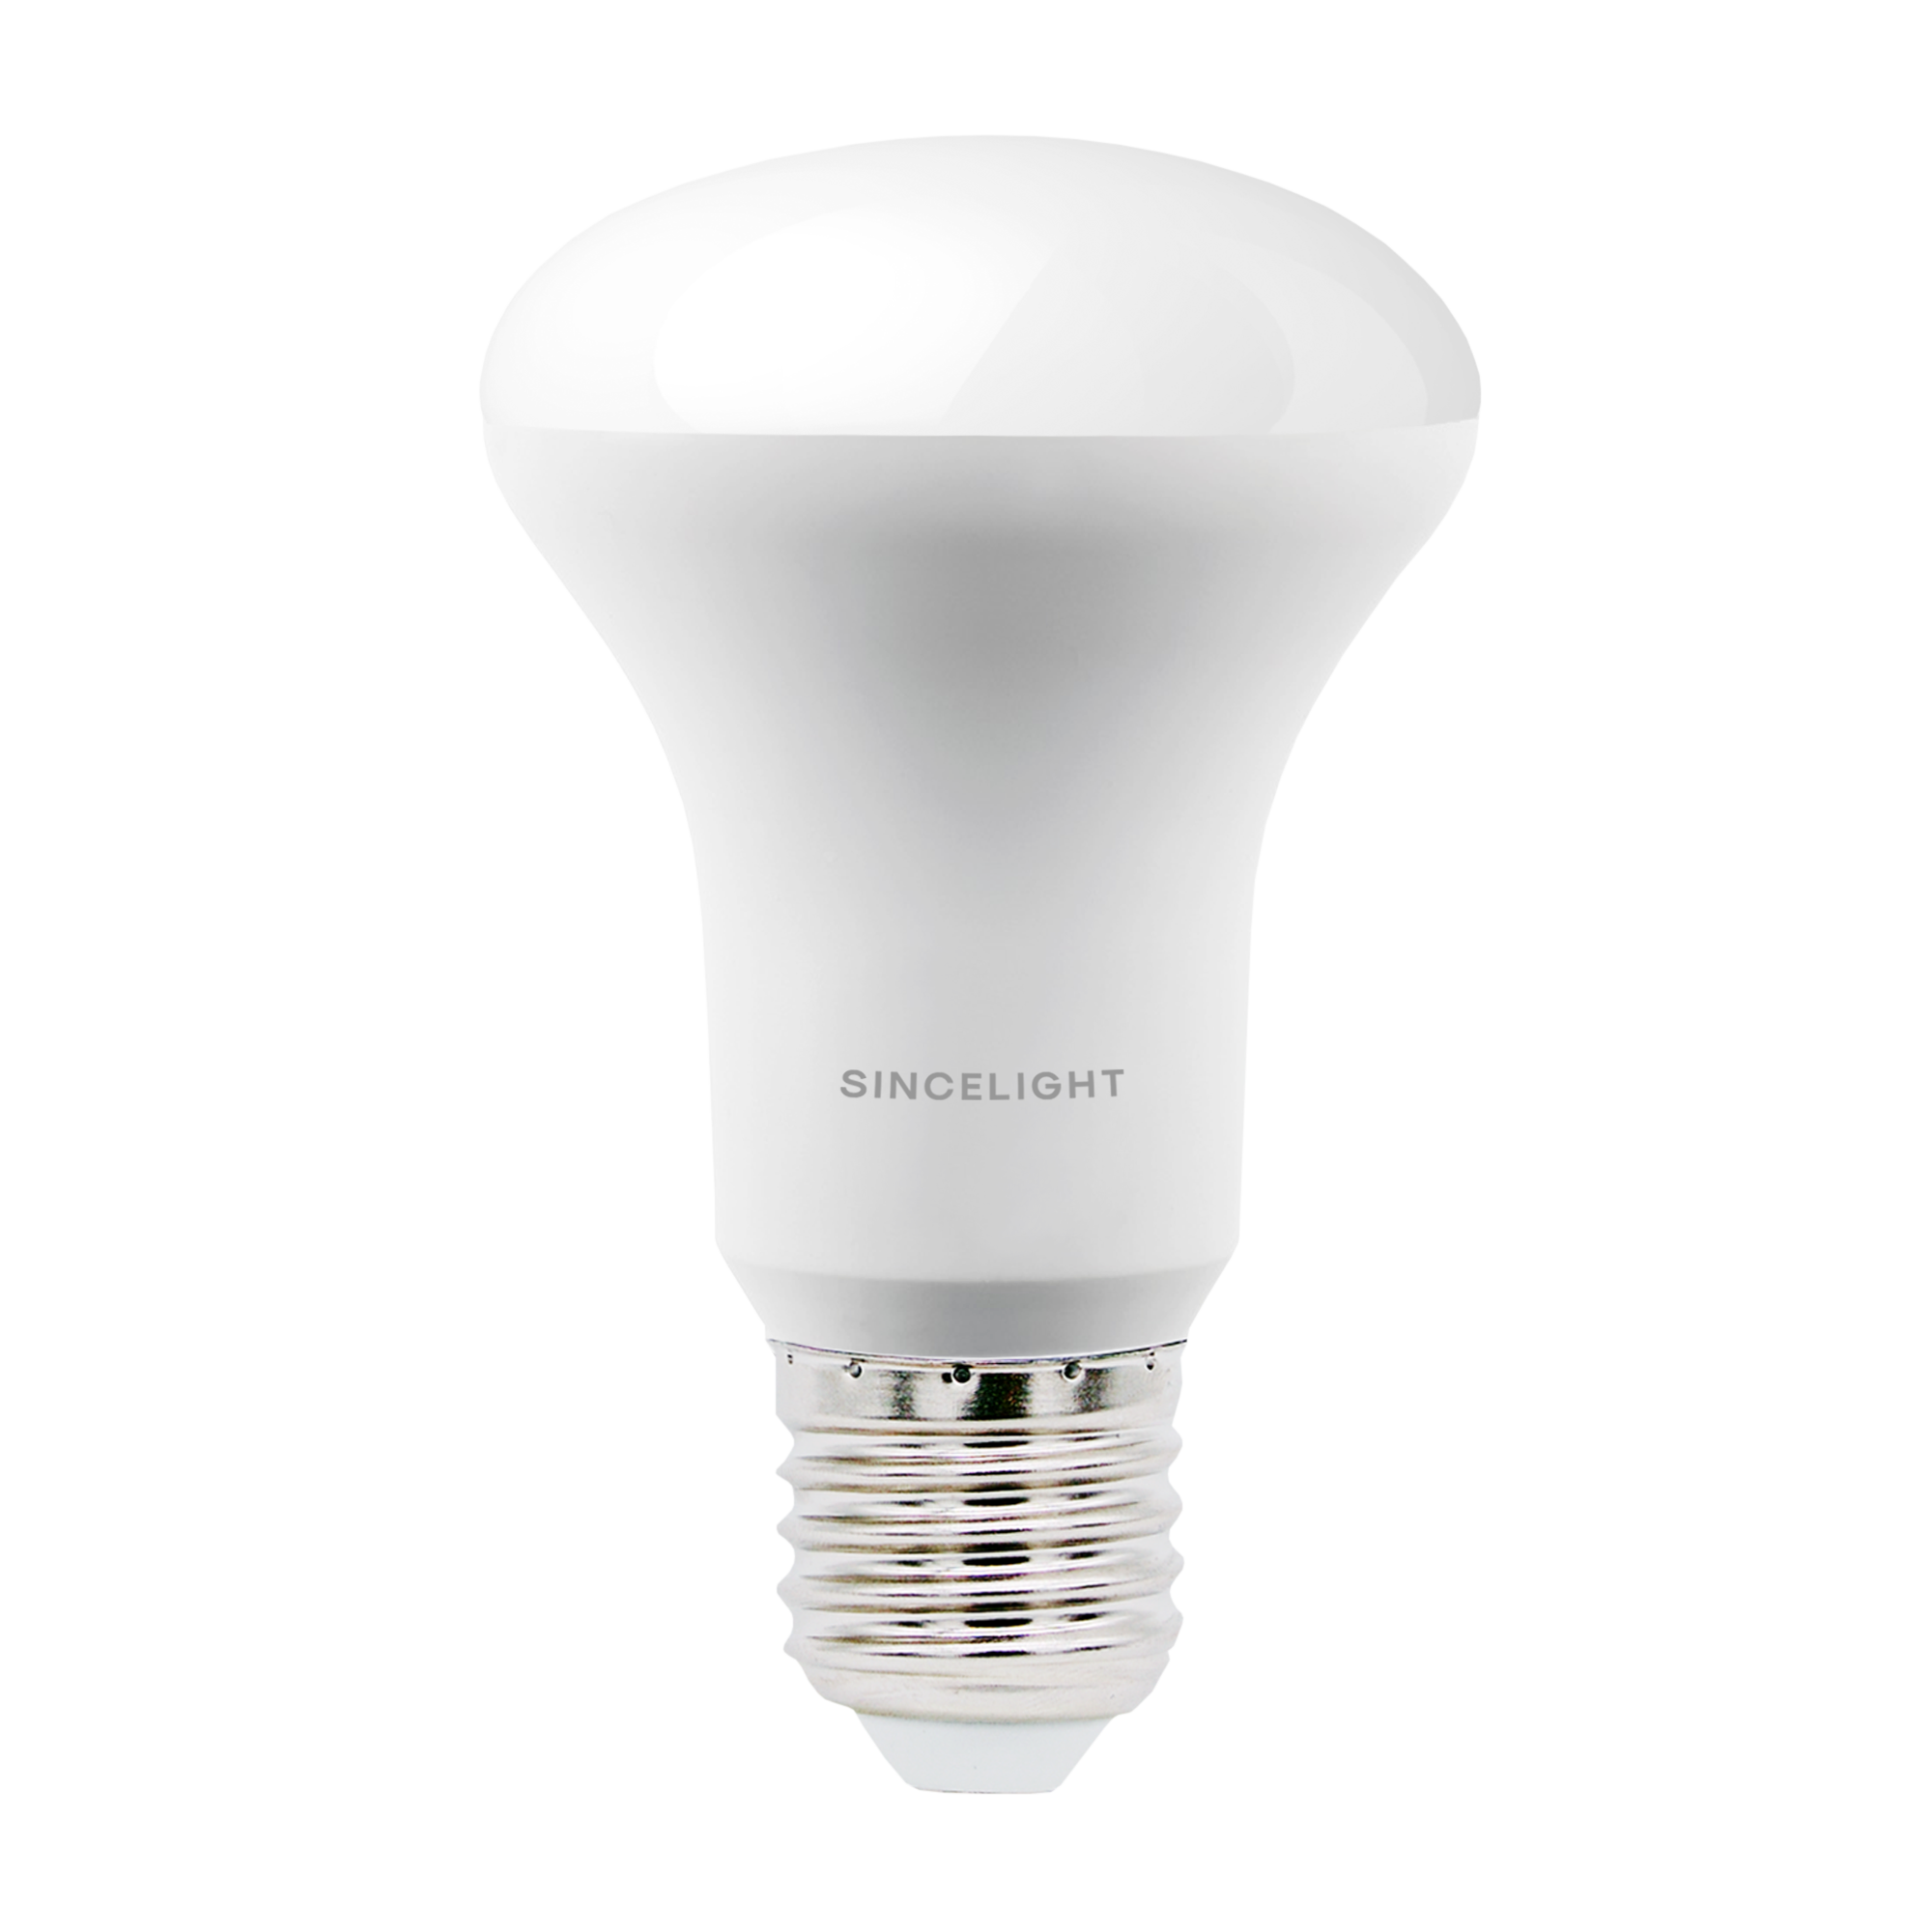 Reflector Spot Lamp Dimmable Light Bulb - 240V R39 R50 R63 R64 R80 R95